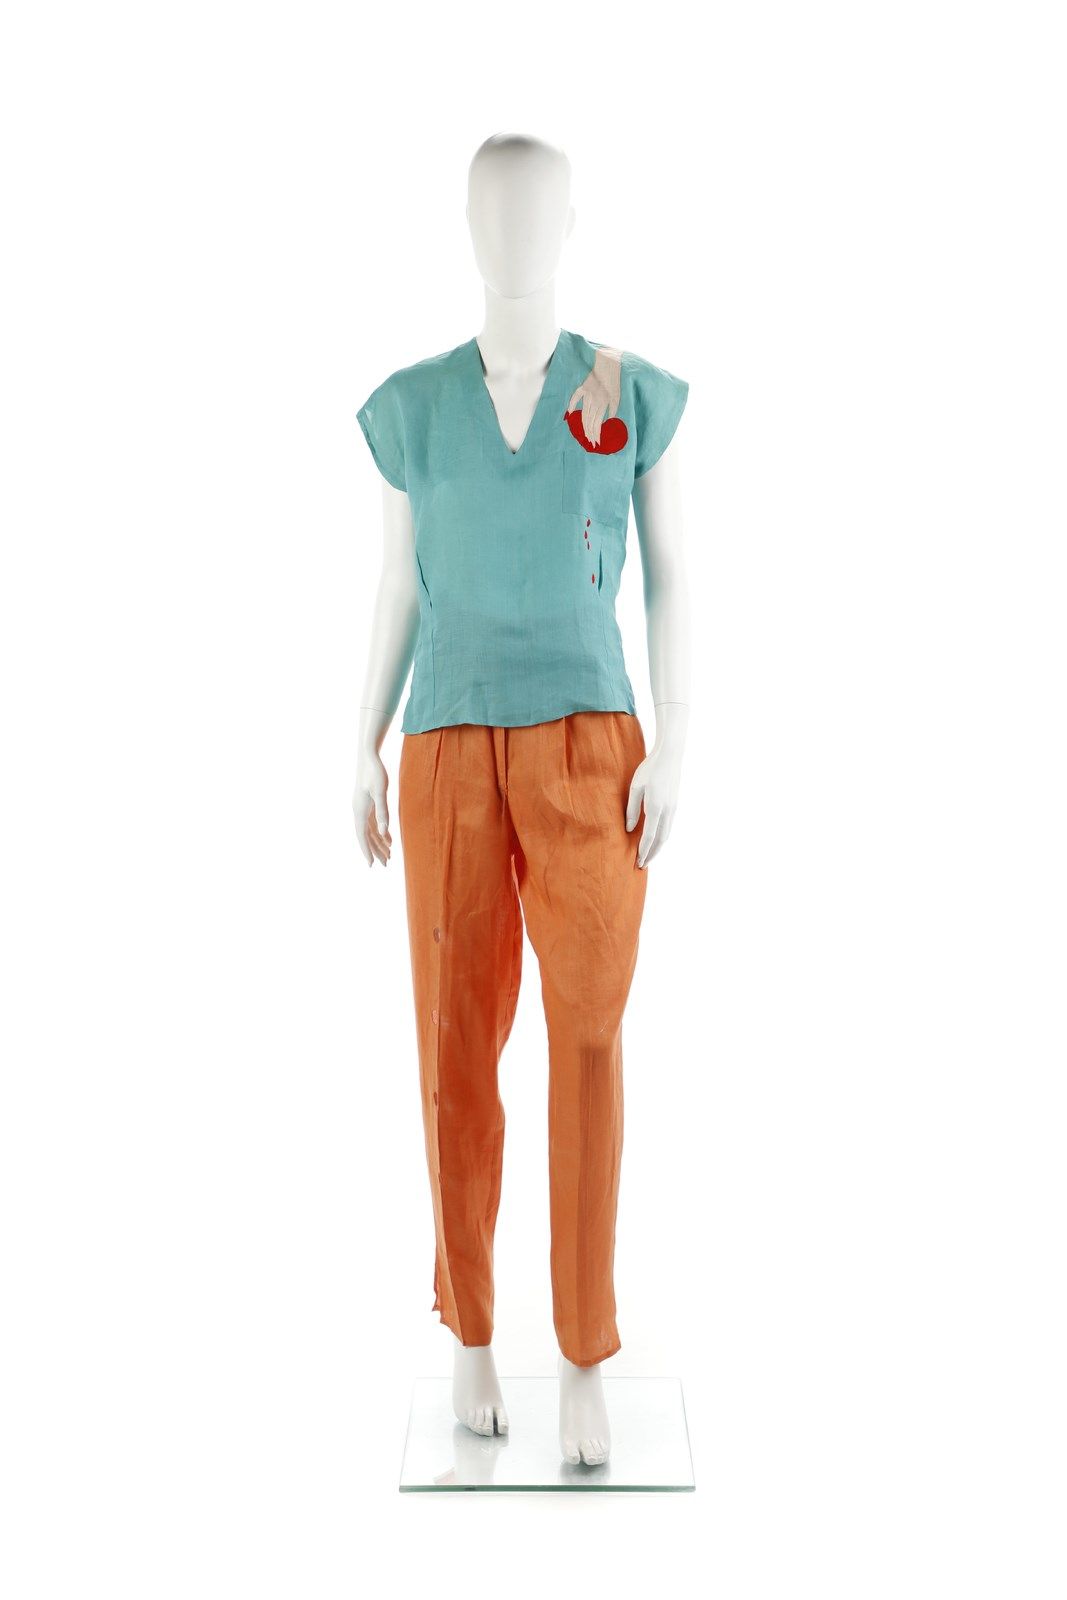 CINZIA RUGGERI Orange linen trouser suit with belt and aqua green shirt, v-neck,&hellip;